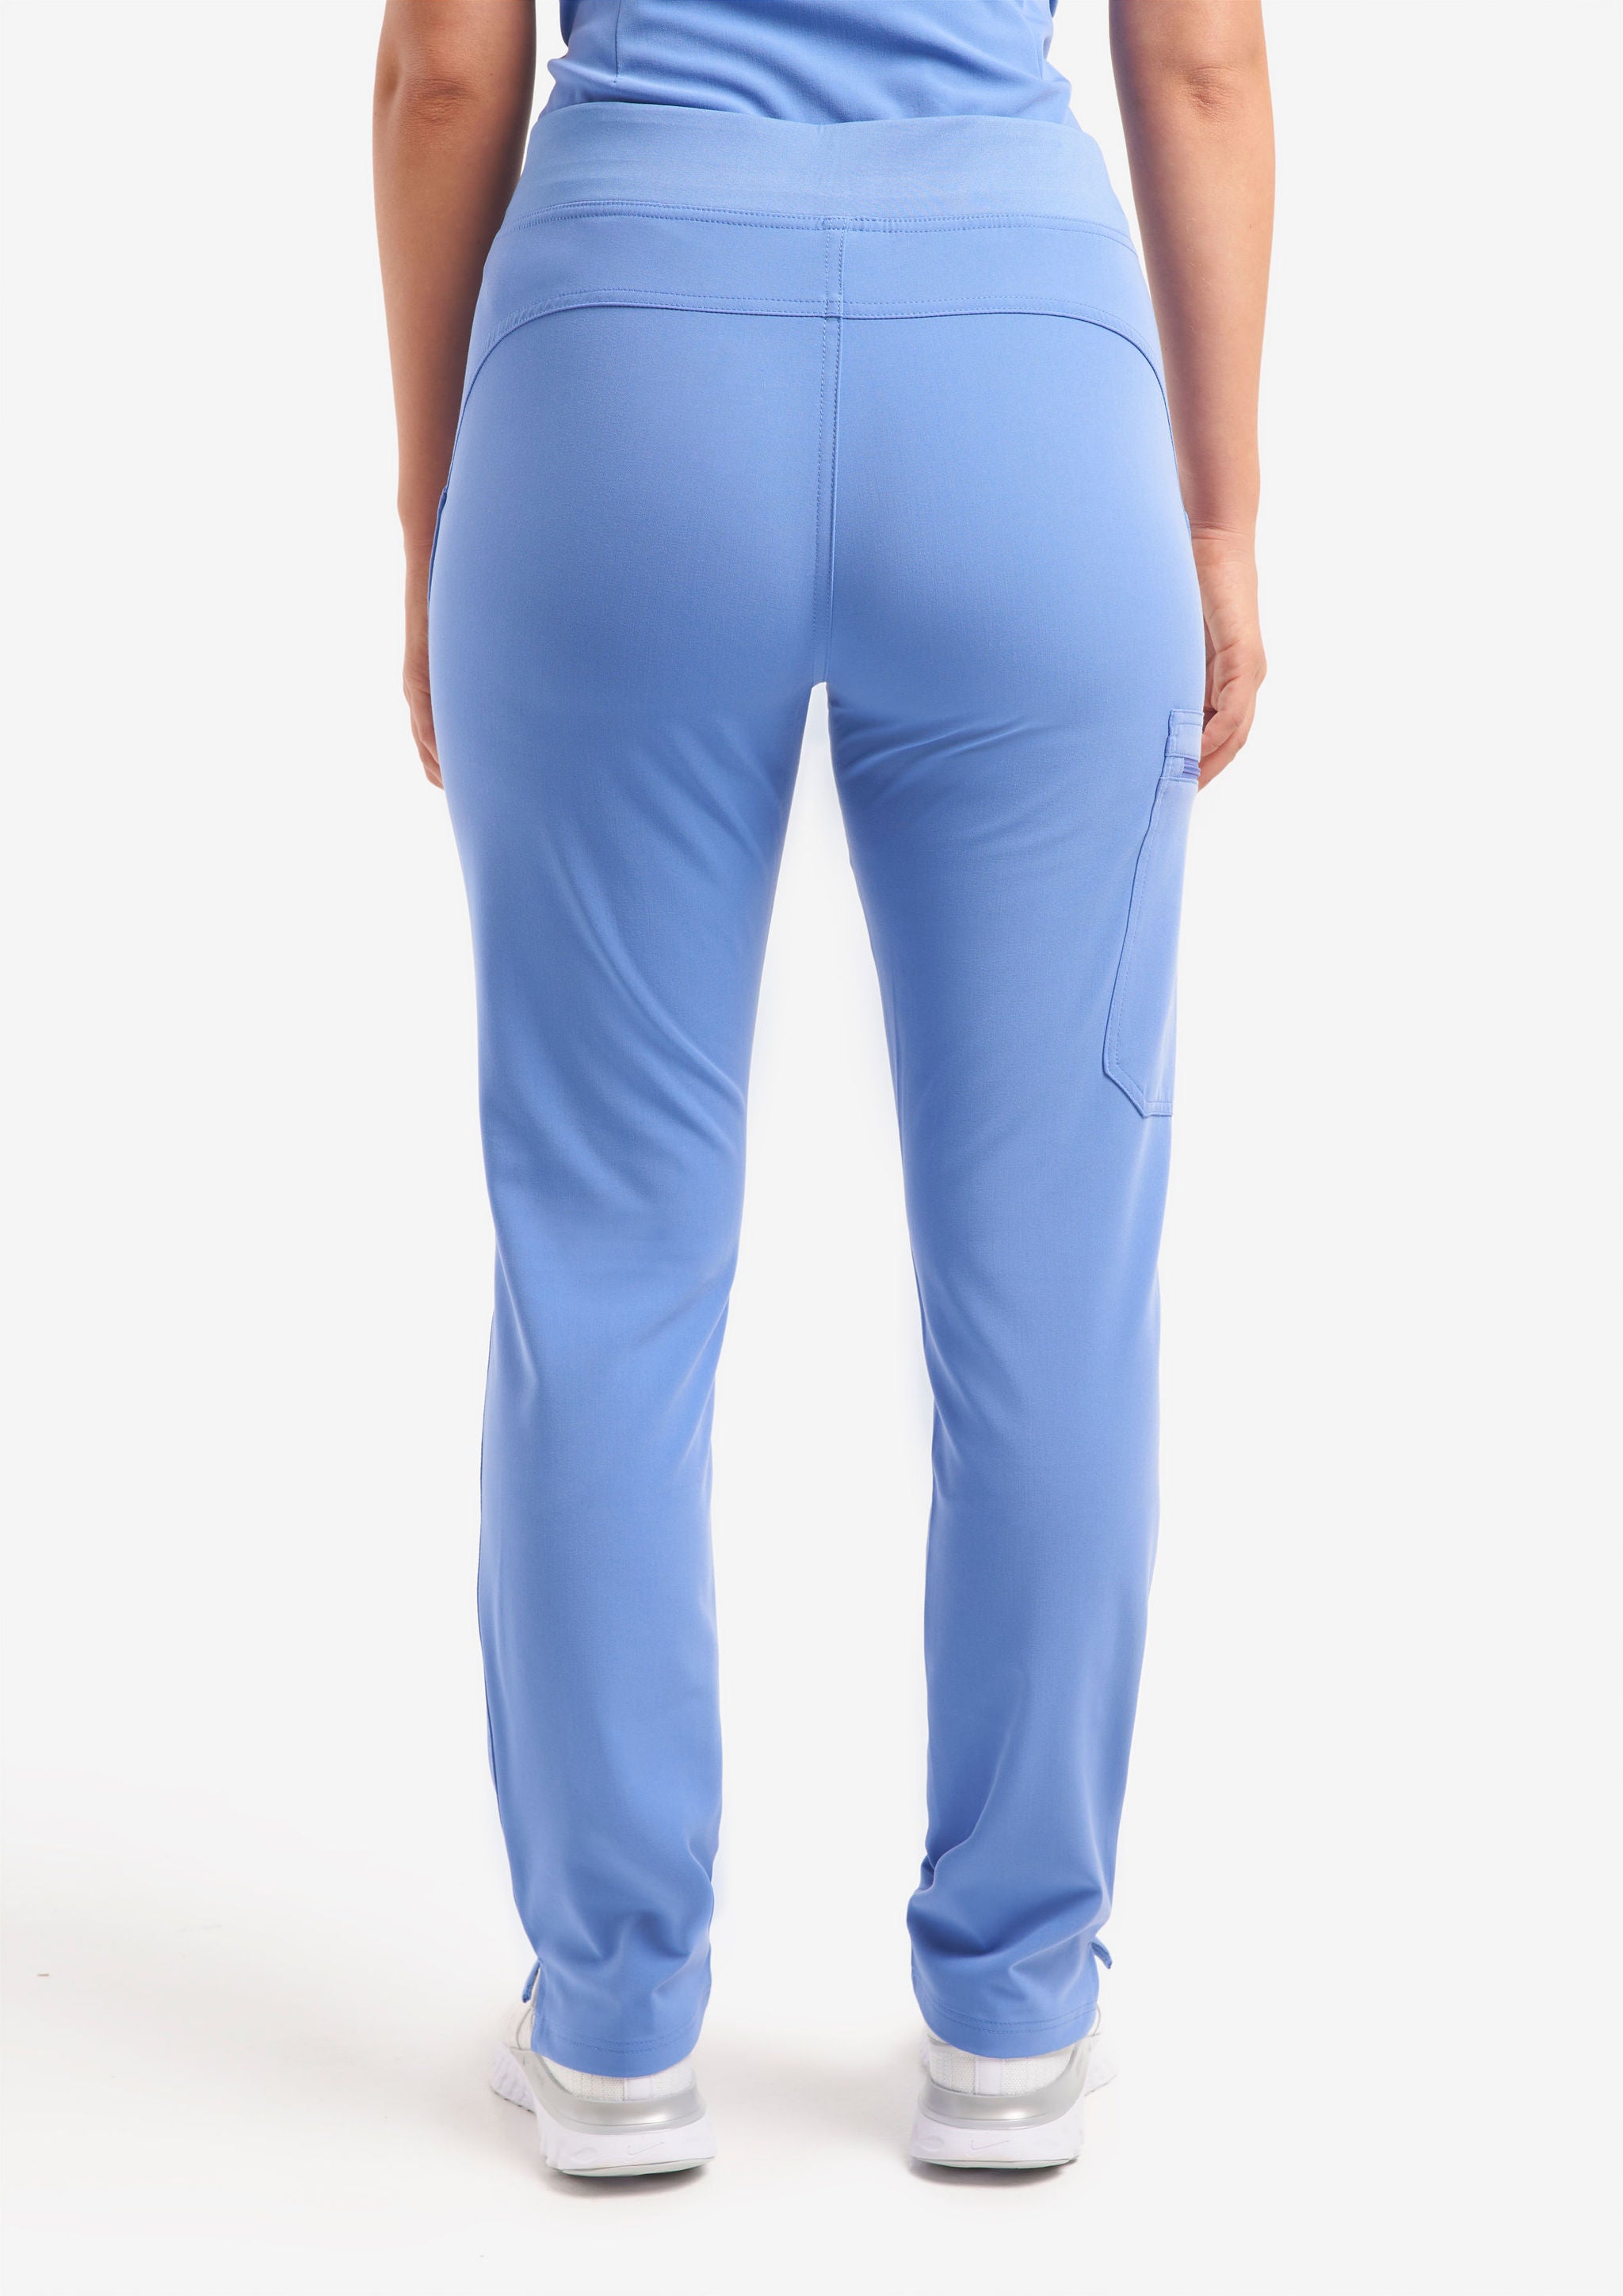 LAGO Scrubs - Women's Ceil Blue Trillium - 3-Pocket Scrub Pants